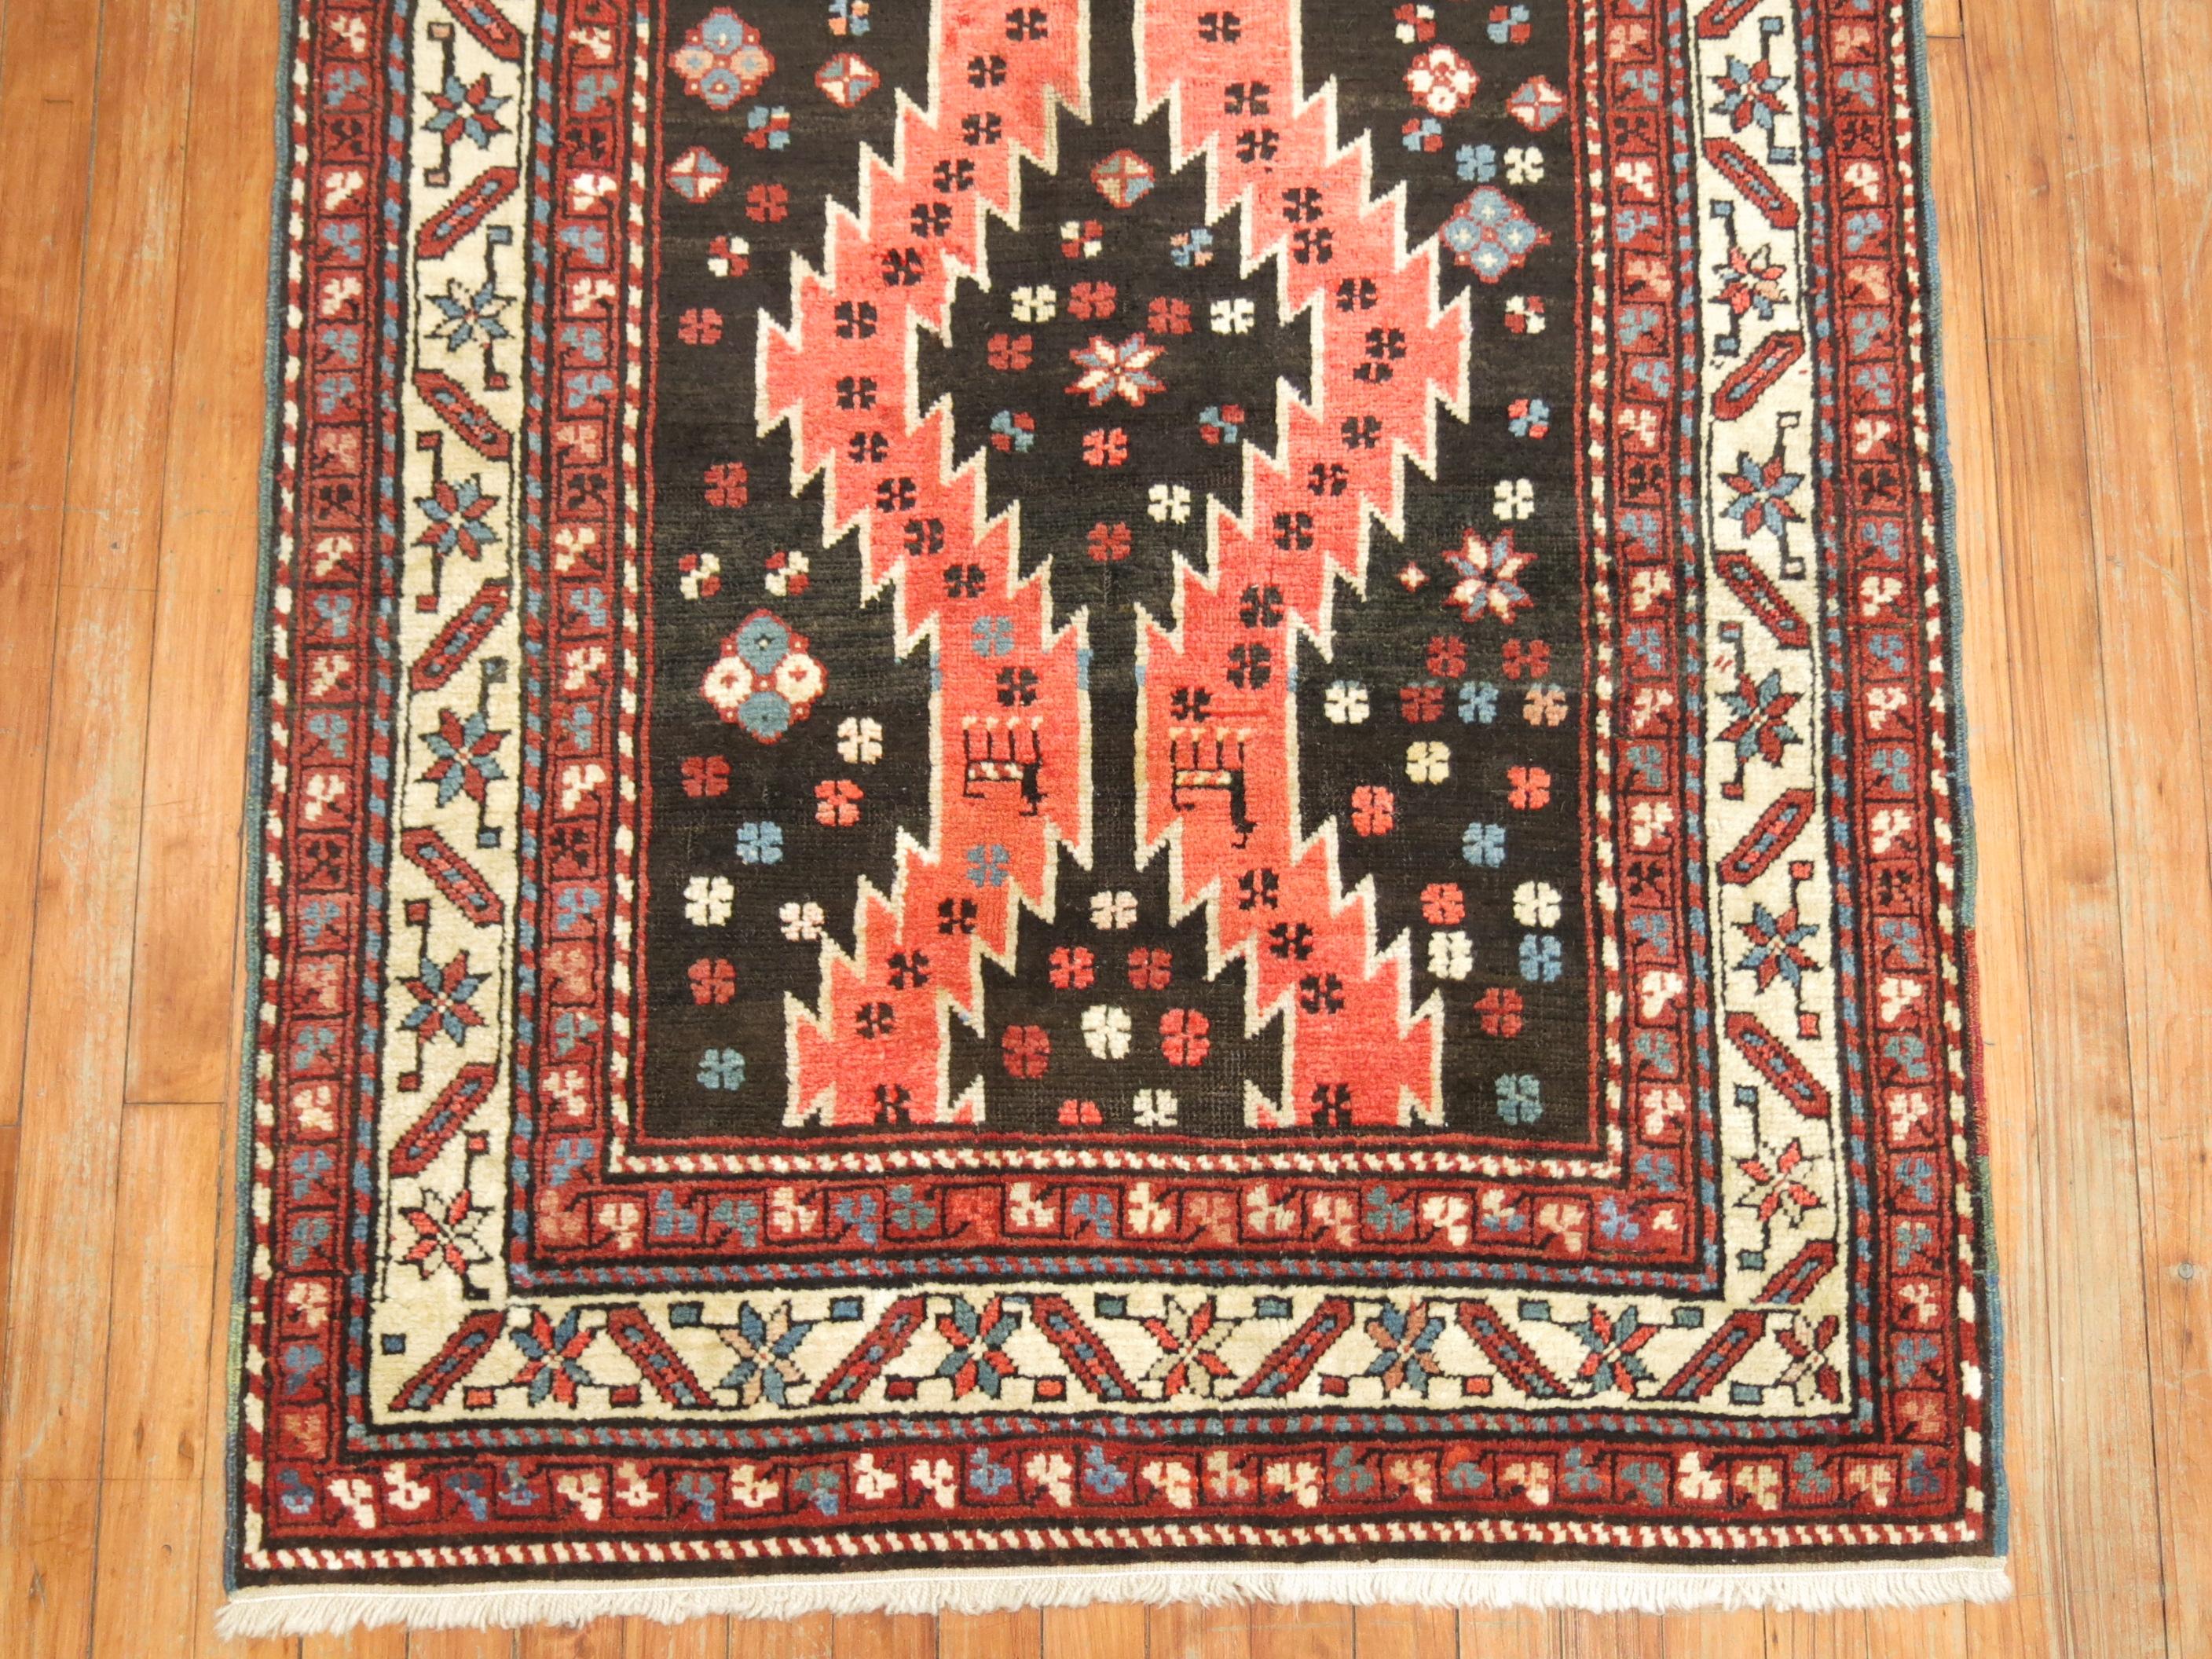 Decorative caliber Russian Karabagh rug in earthy colors.